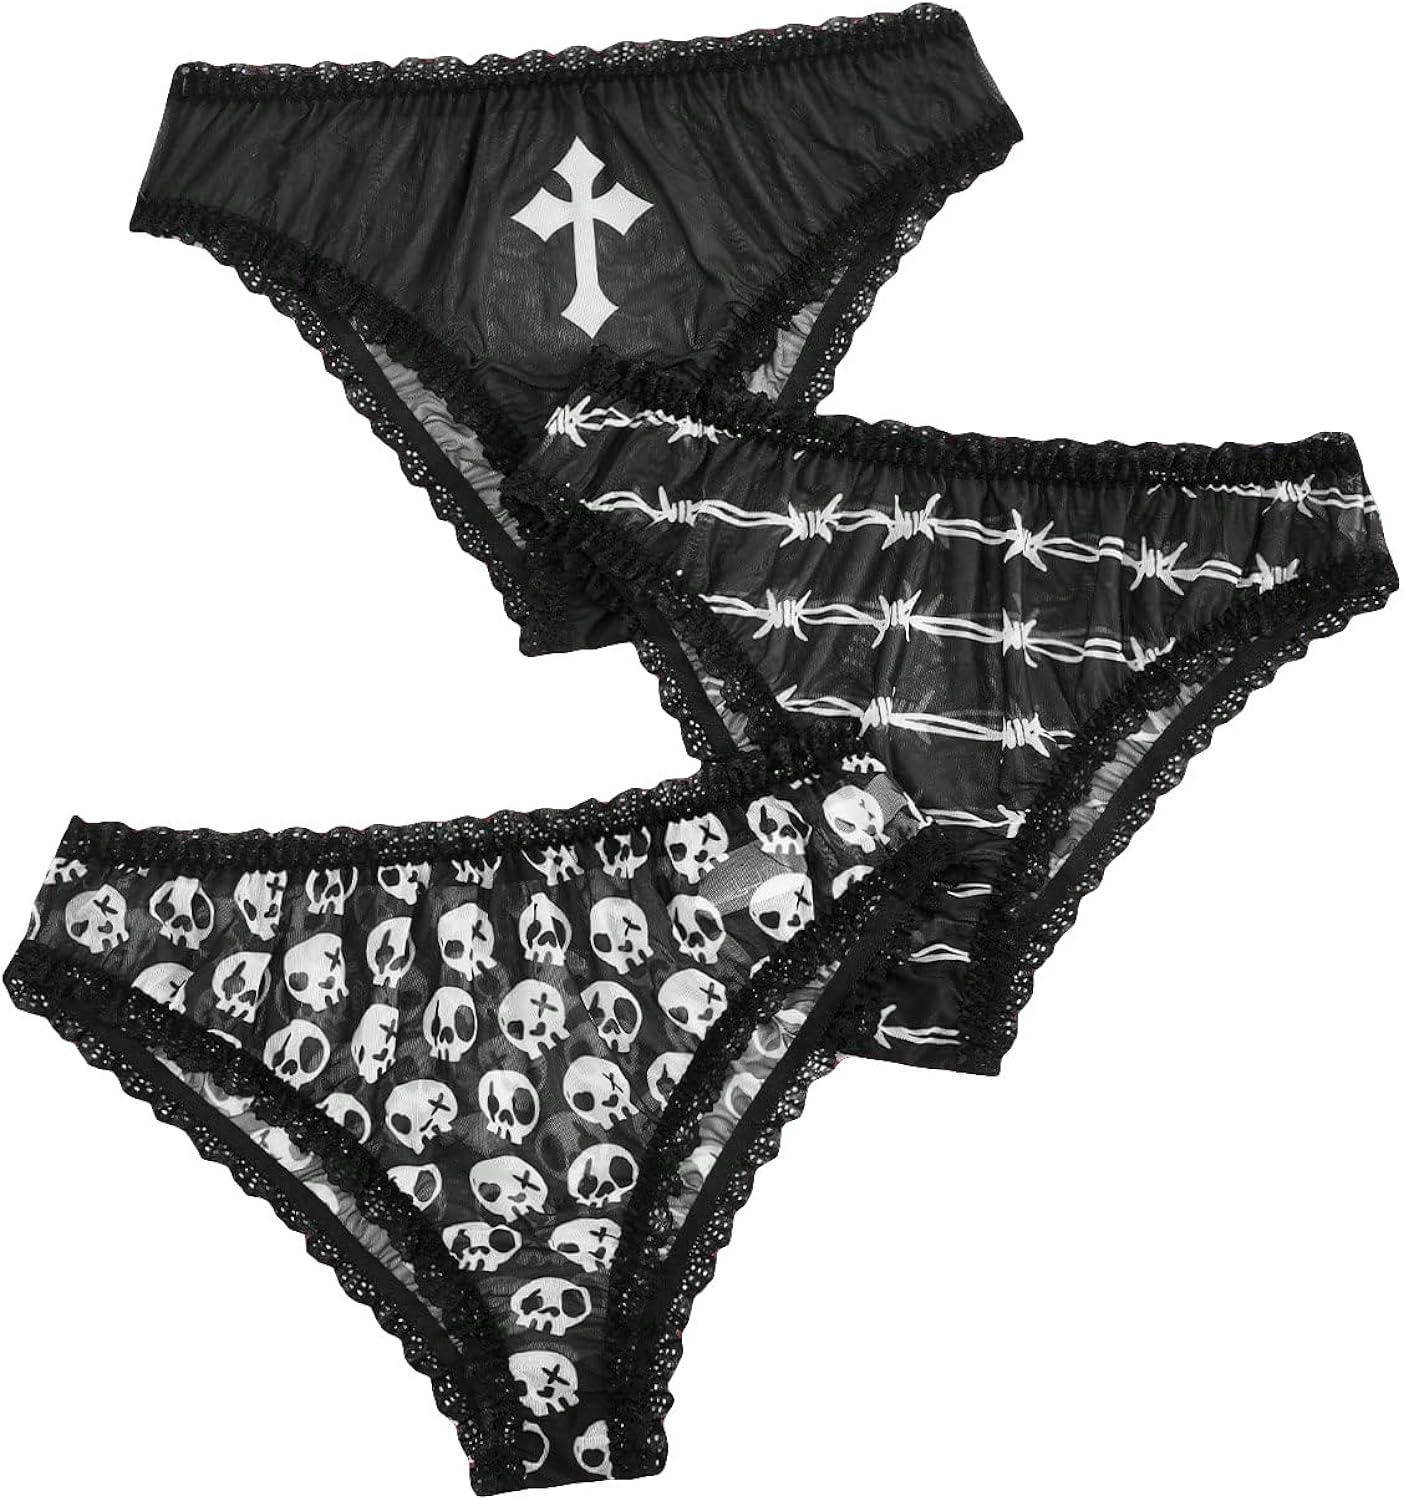 WDIRARA Women's 3 Pack Skull Graphic Print Lace Trim Underwear Panty Set